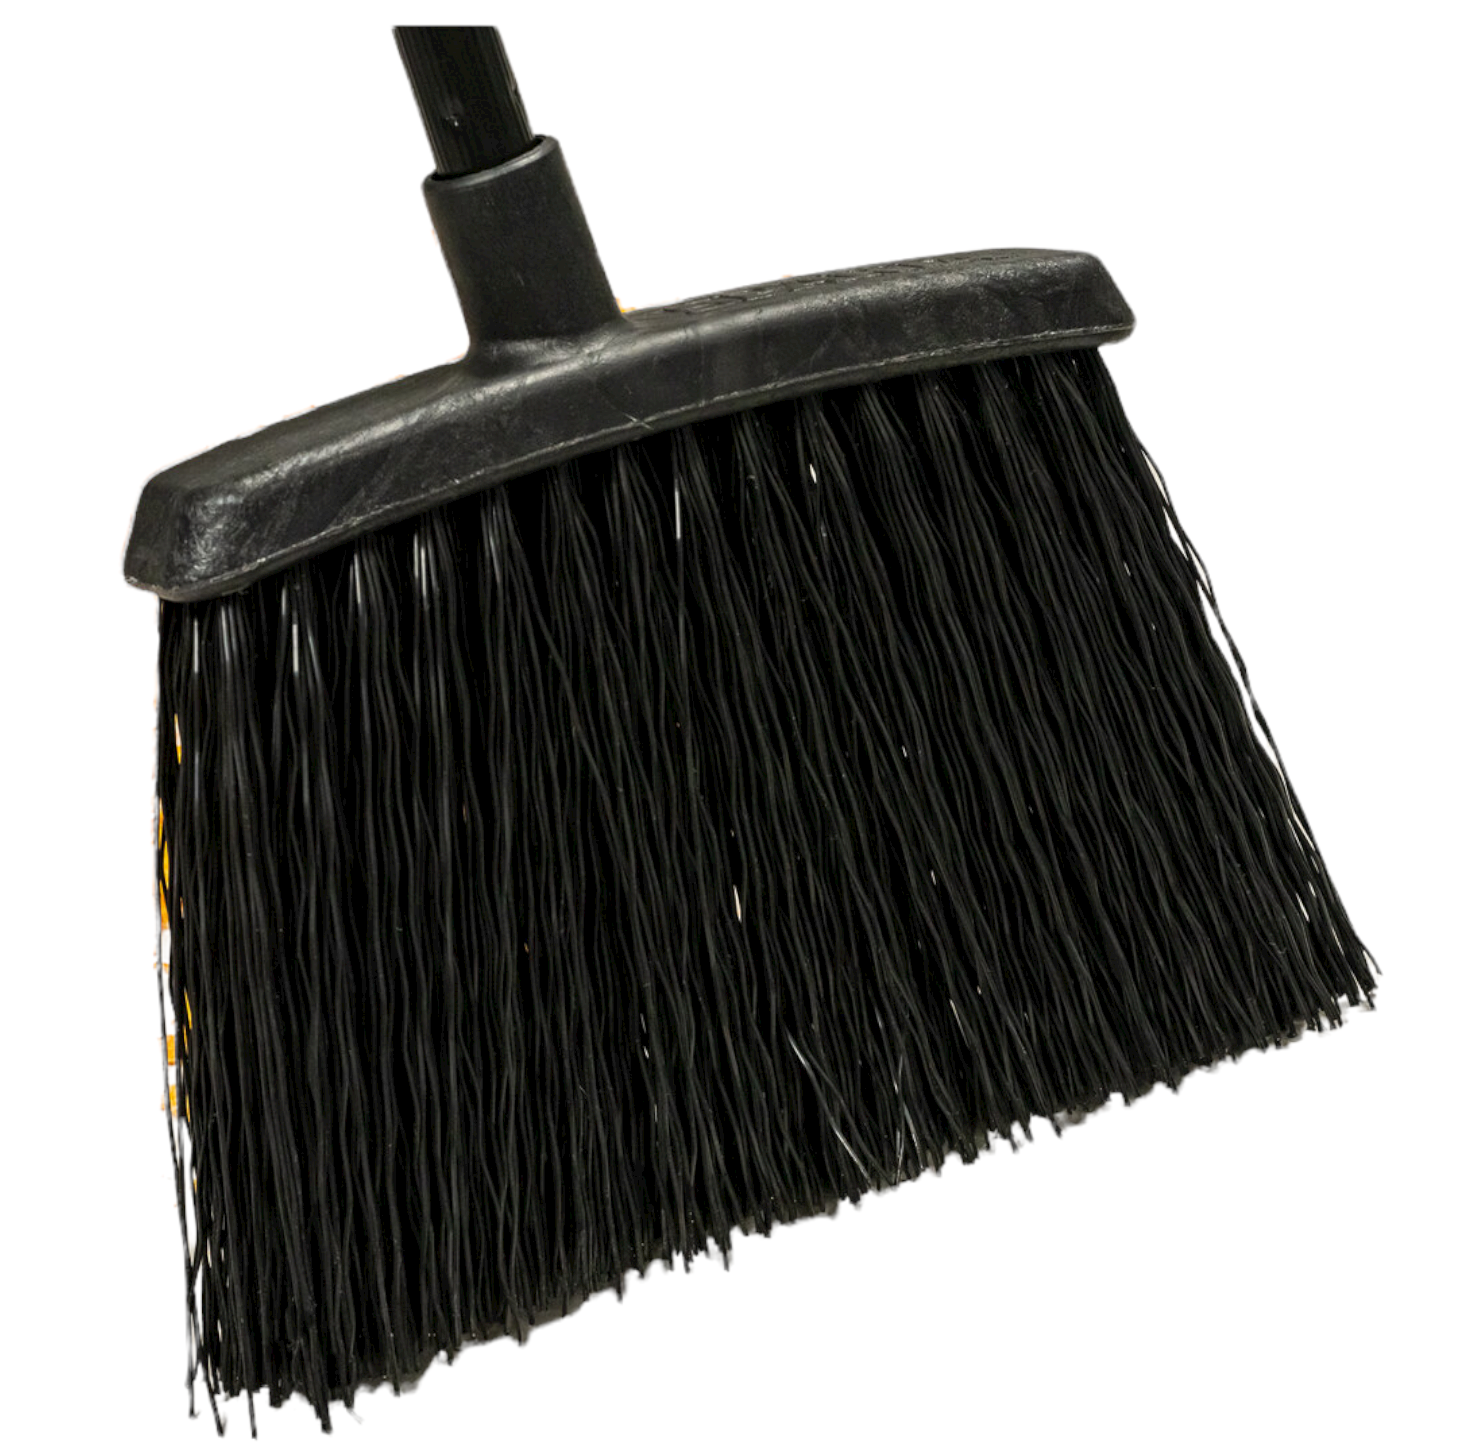 Carlisle 46884-03 Duo-Sweep Unflagged Warehouse Broom with Black Metal Handle 48" - Black